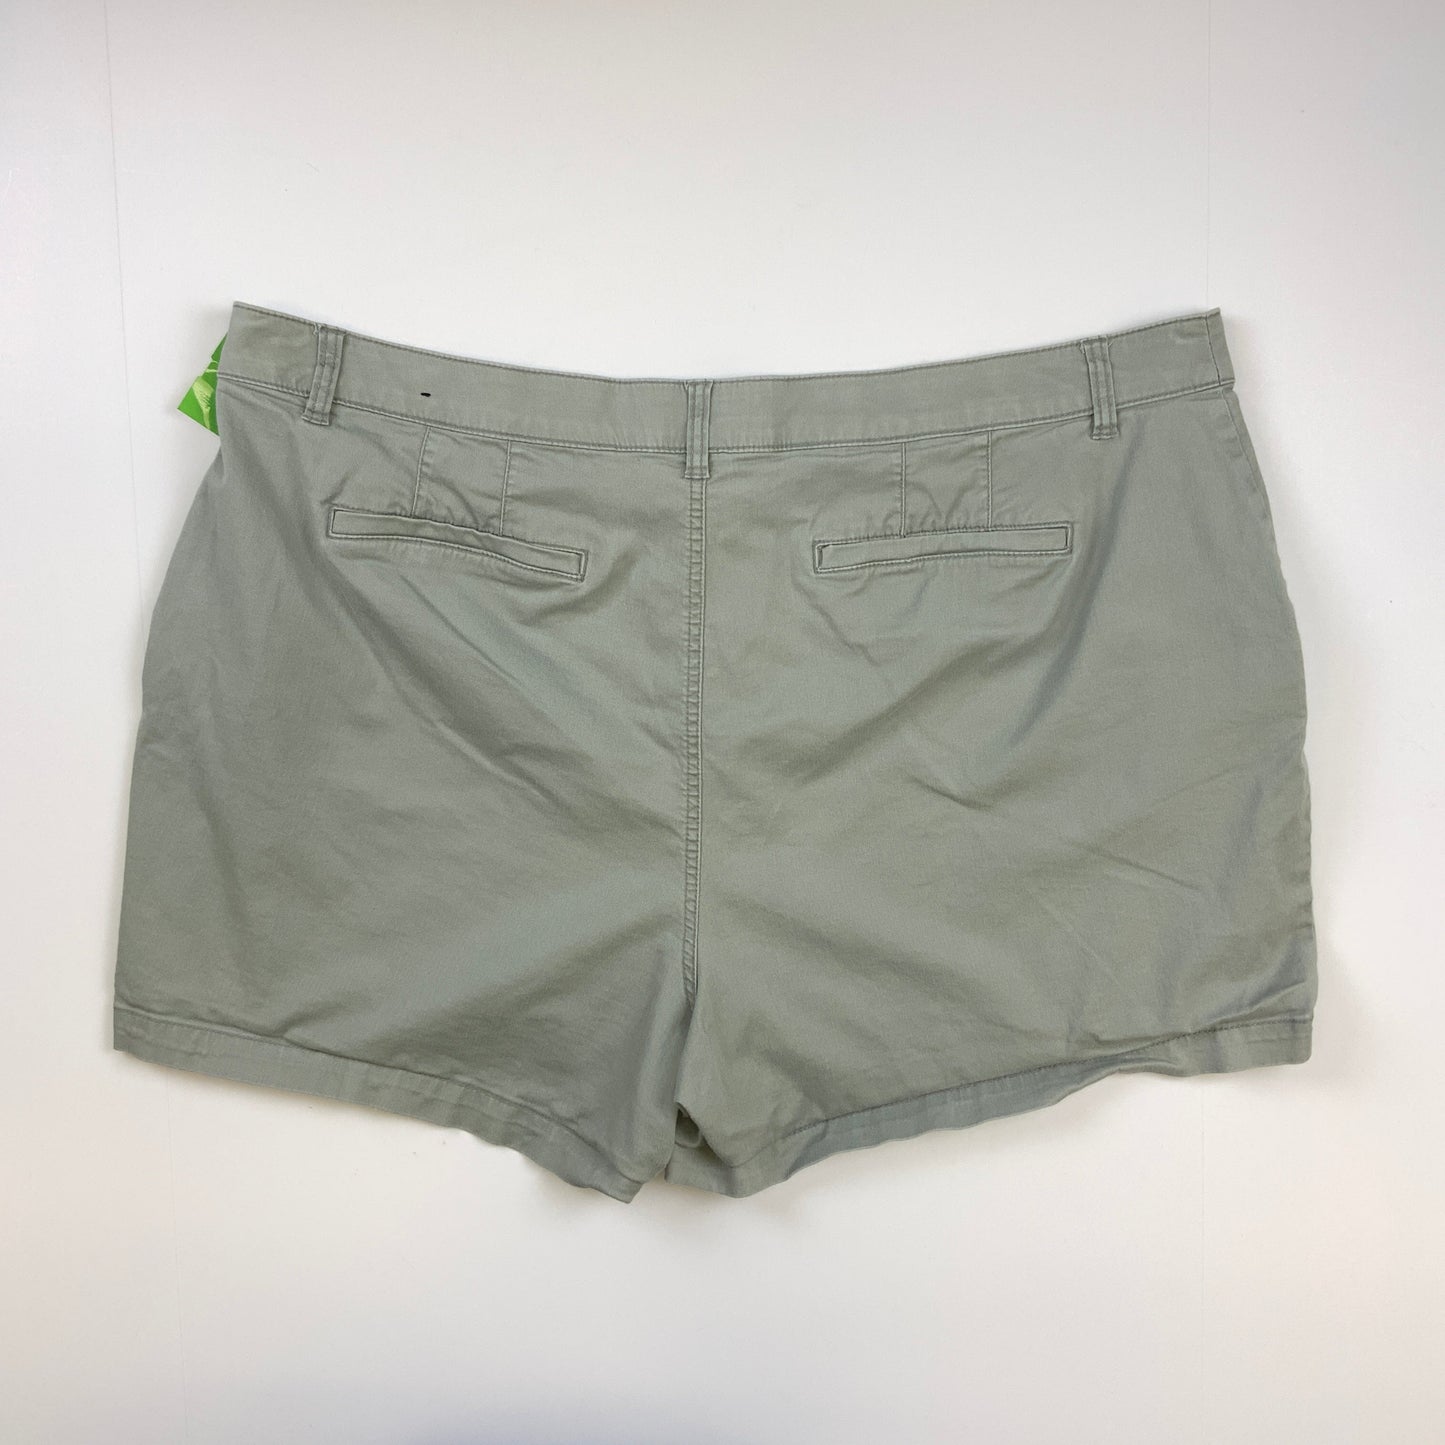 Green Shorts Lane Bryant, Size 24